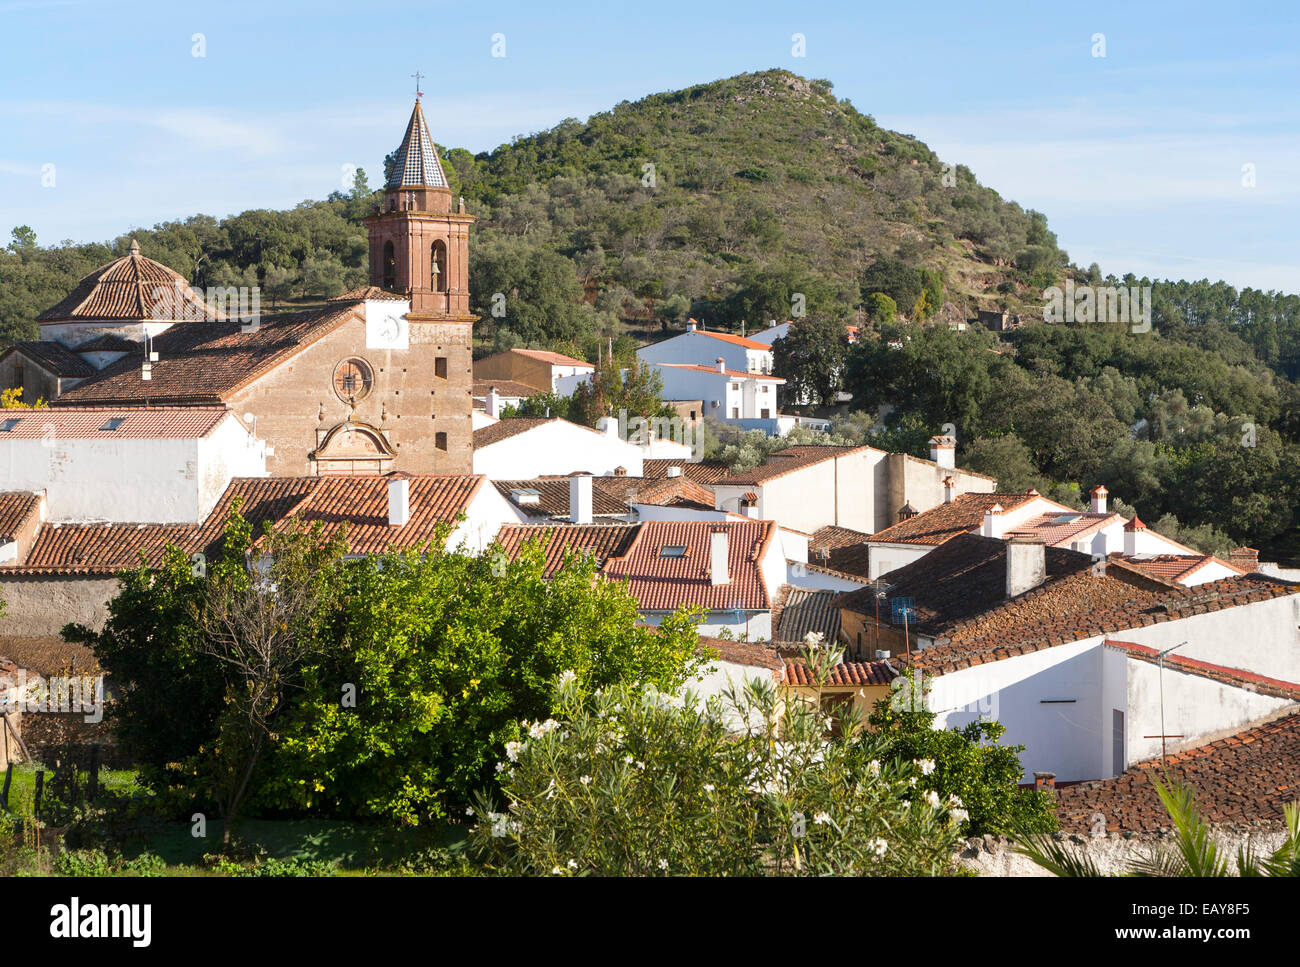 Church and village houses of Santa Ana de Real, Sierra de Aracena, Huelva province, Spain Stock Photo